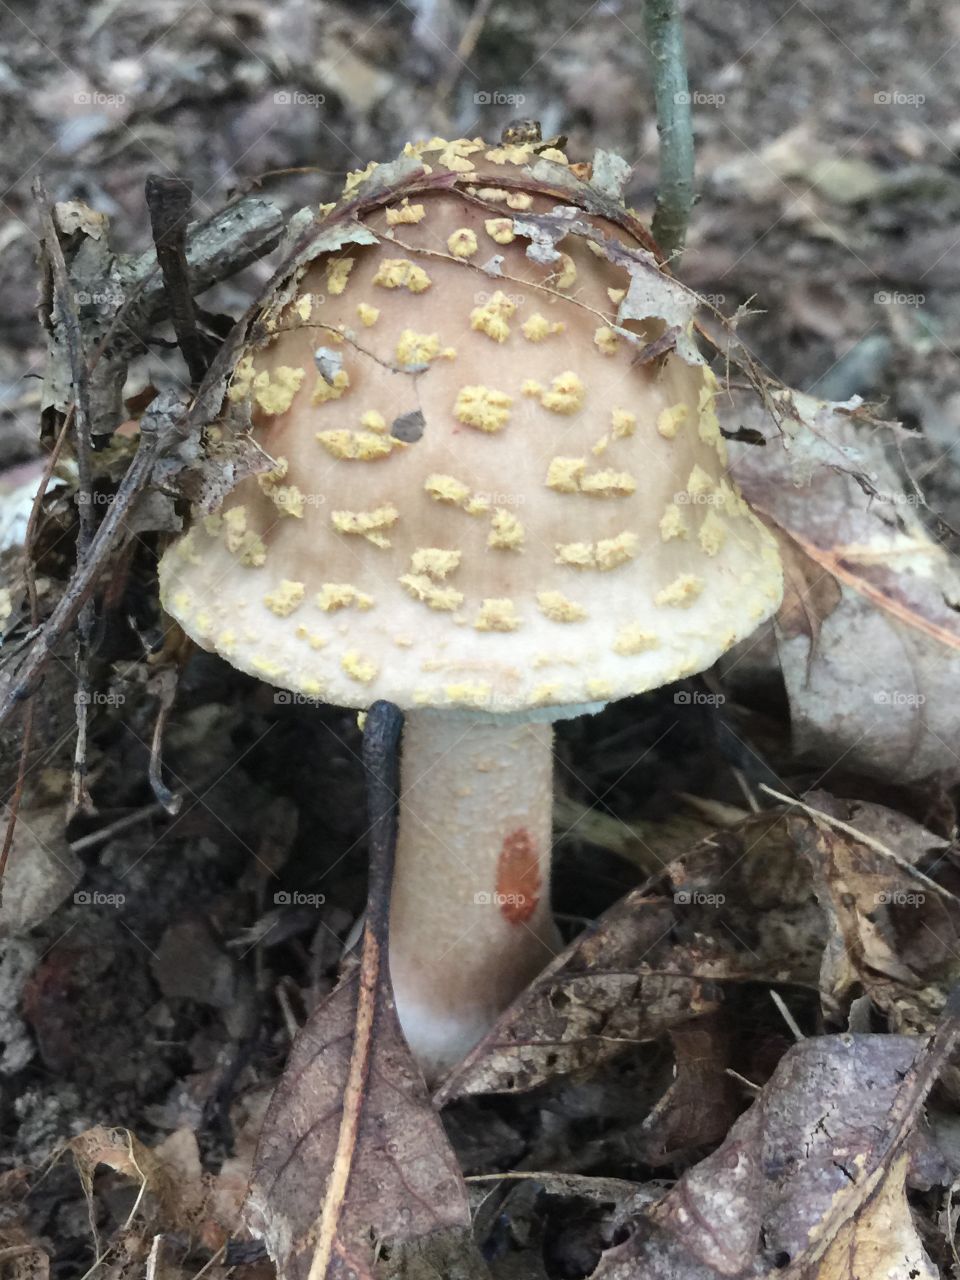 Cool cap on this mushroom